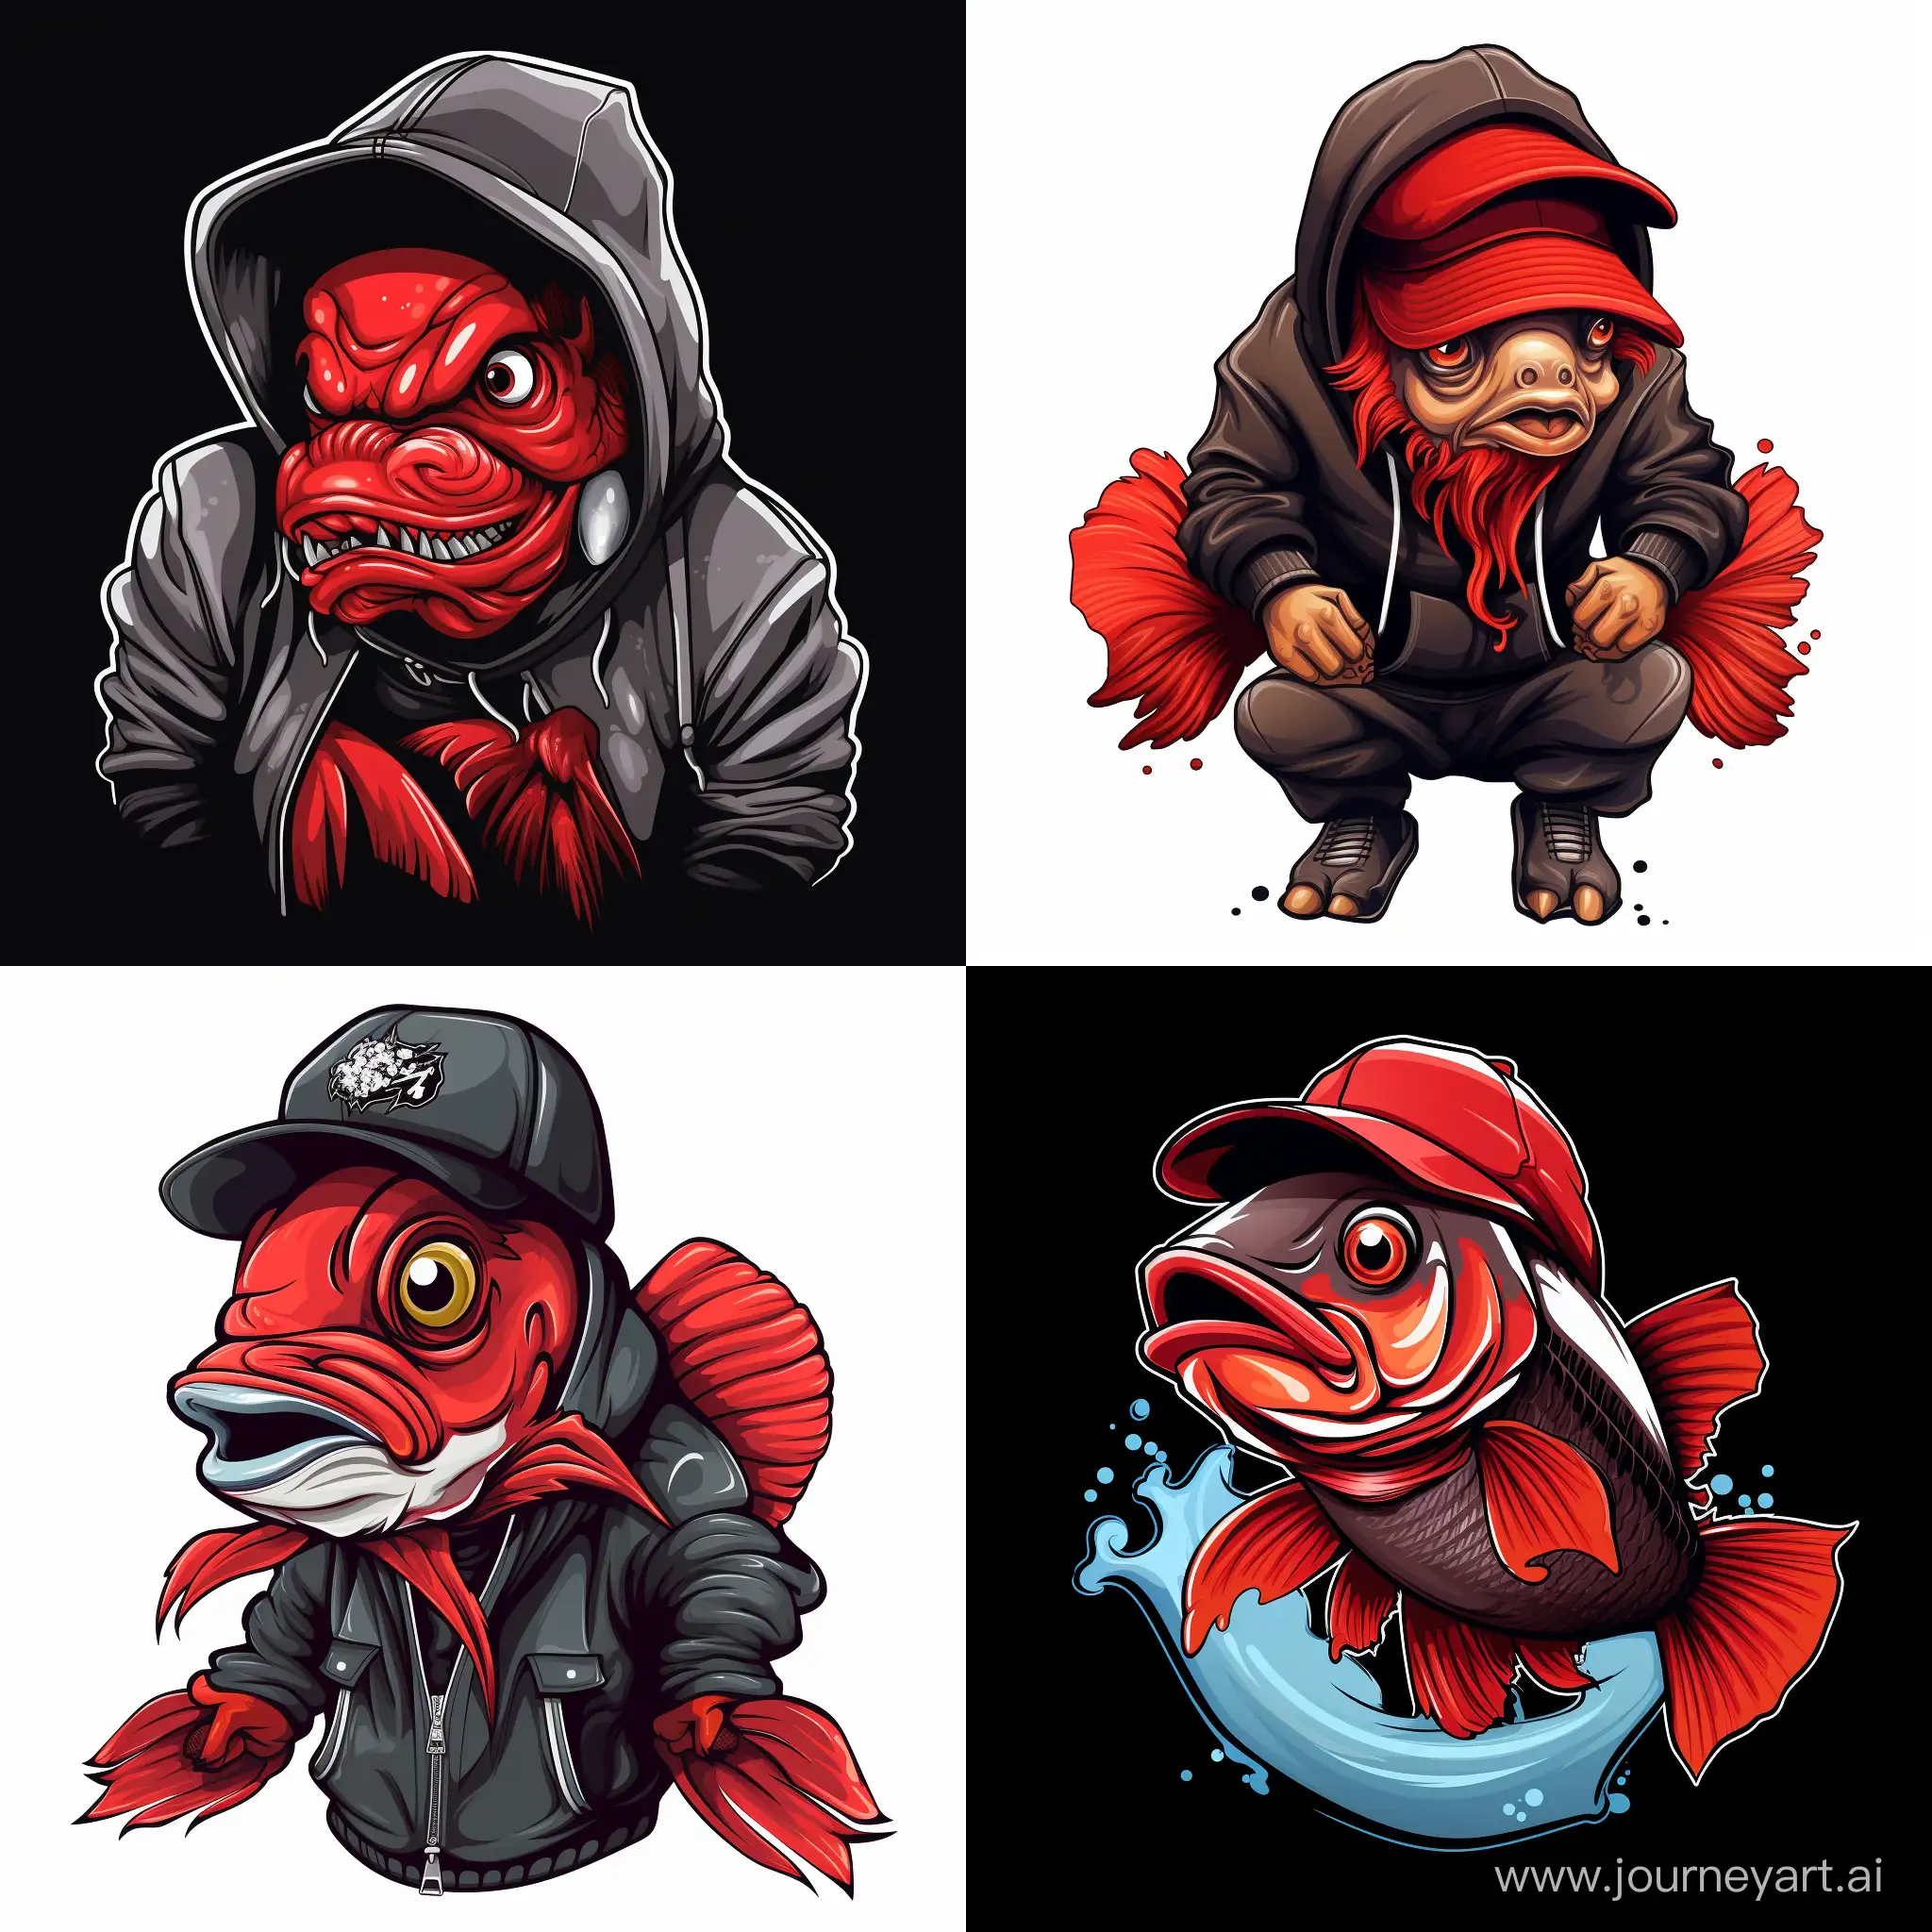 Dynamic-Black-and-Red-Graffiti-Fishing-Cartoon-for-Trendy-TShirt-Design-in-HighQuality-8K